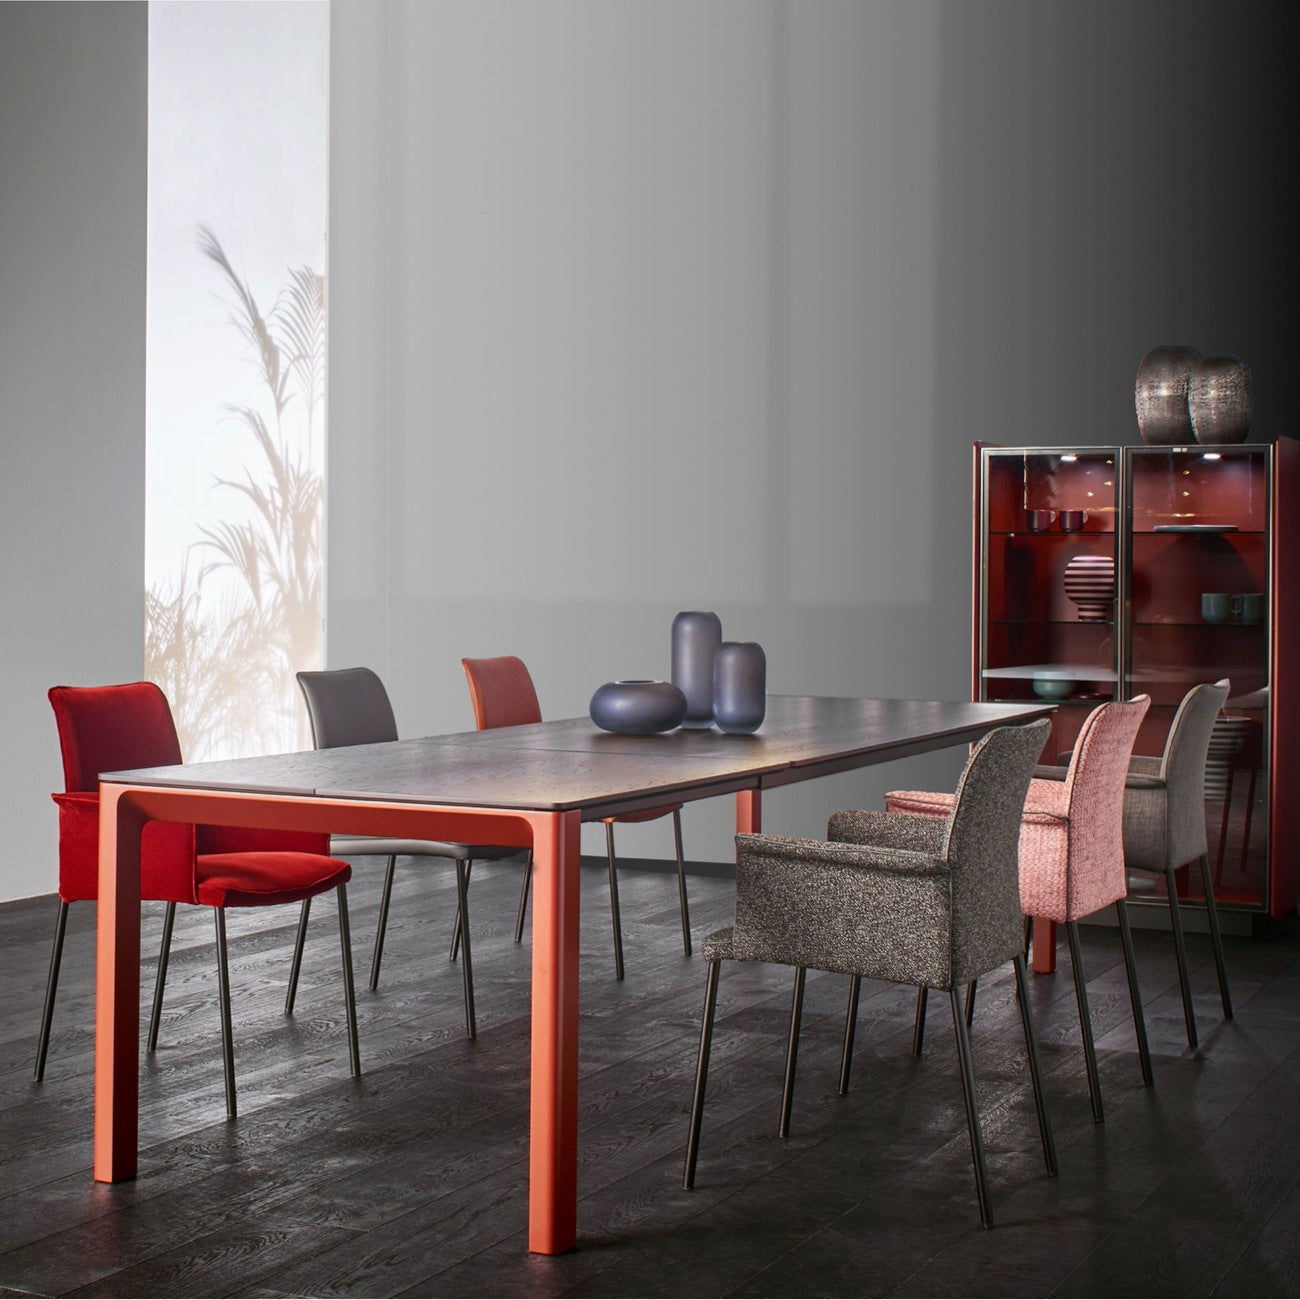 meeting room design with PORTO table by Christine Kröncke Interior Design